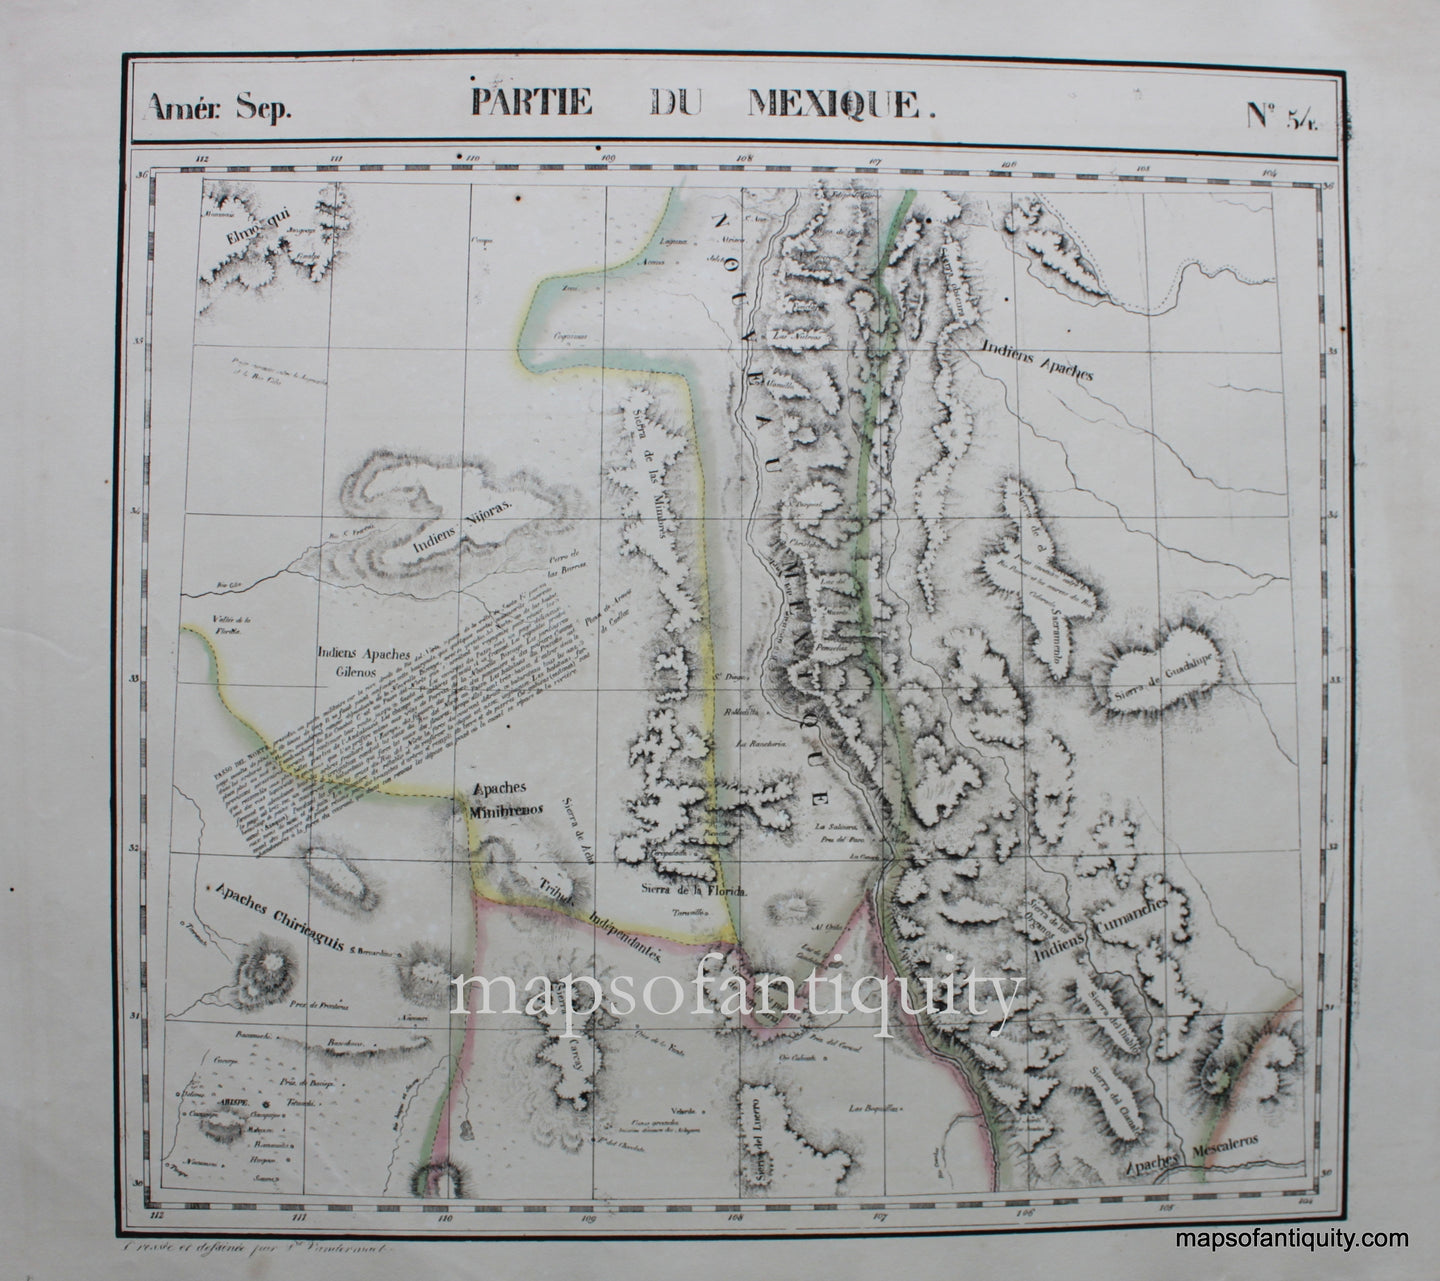 Antique-Hand-Colored-Map-Amer.-Sep.-No.-54-Partie-du-Mexique-**********-North-America--1827-Vandermaelen-Maps-Of-Antiquity